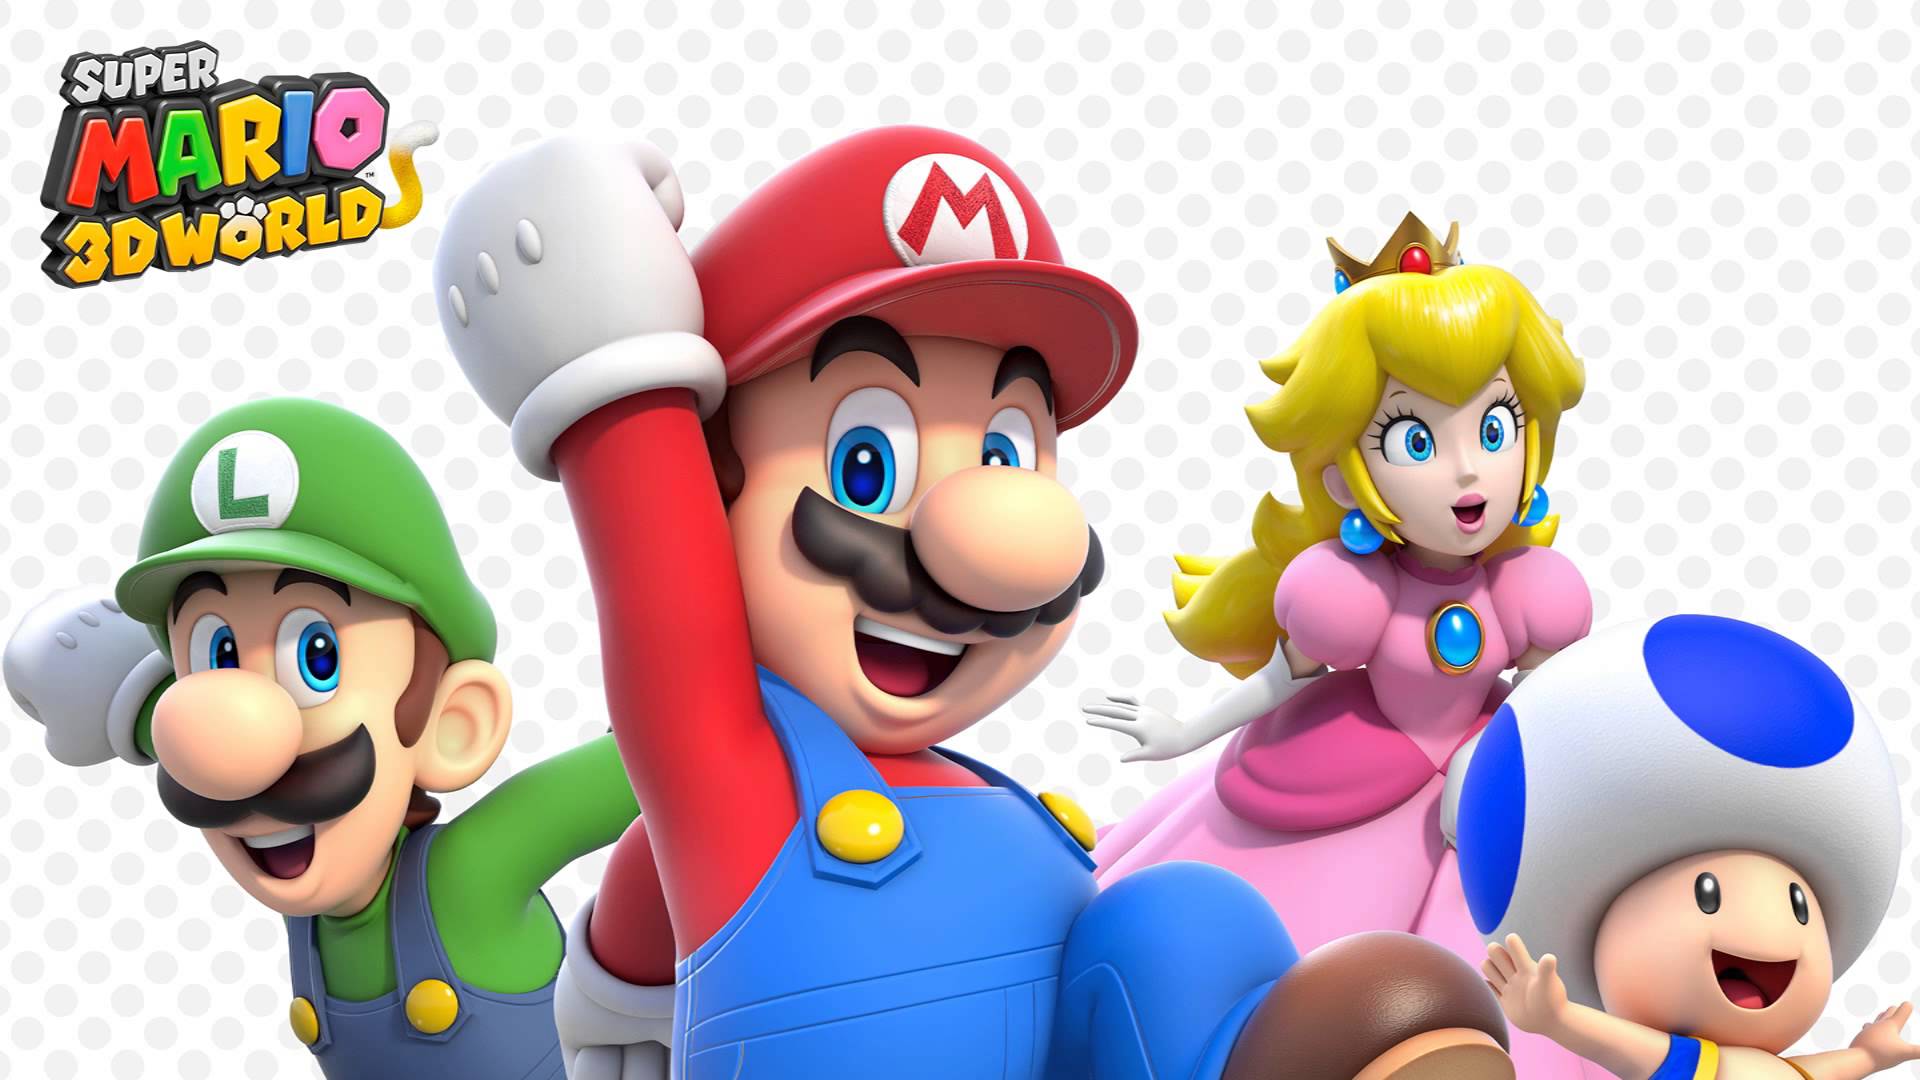 Super Mario 3D World HD Wallpaper, Background Image